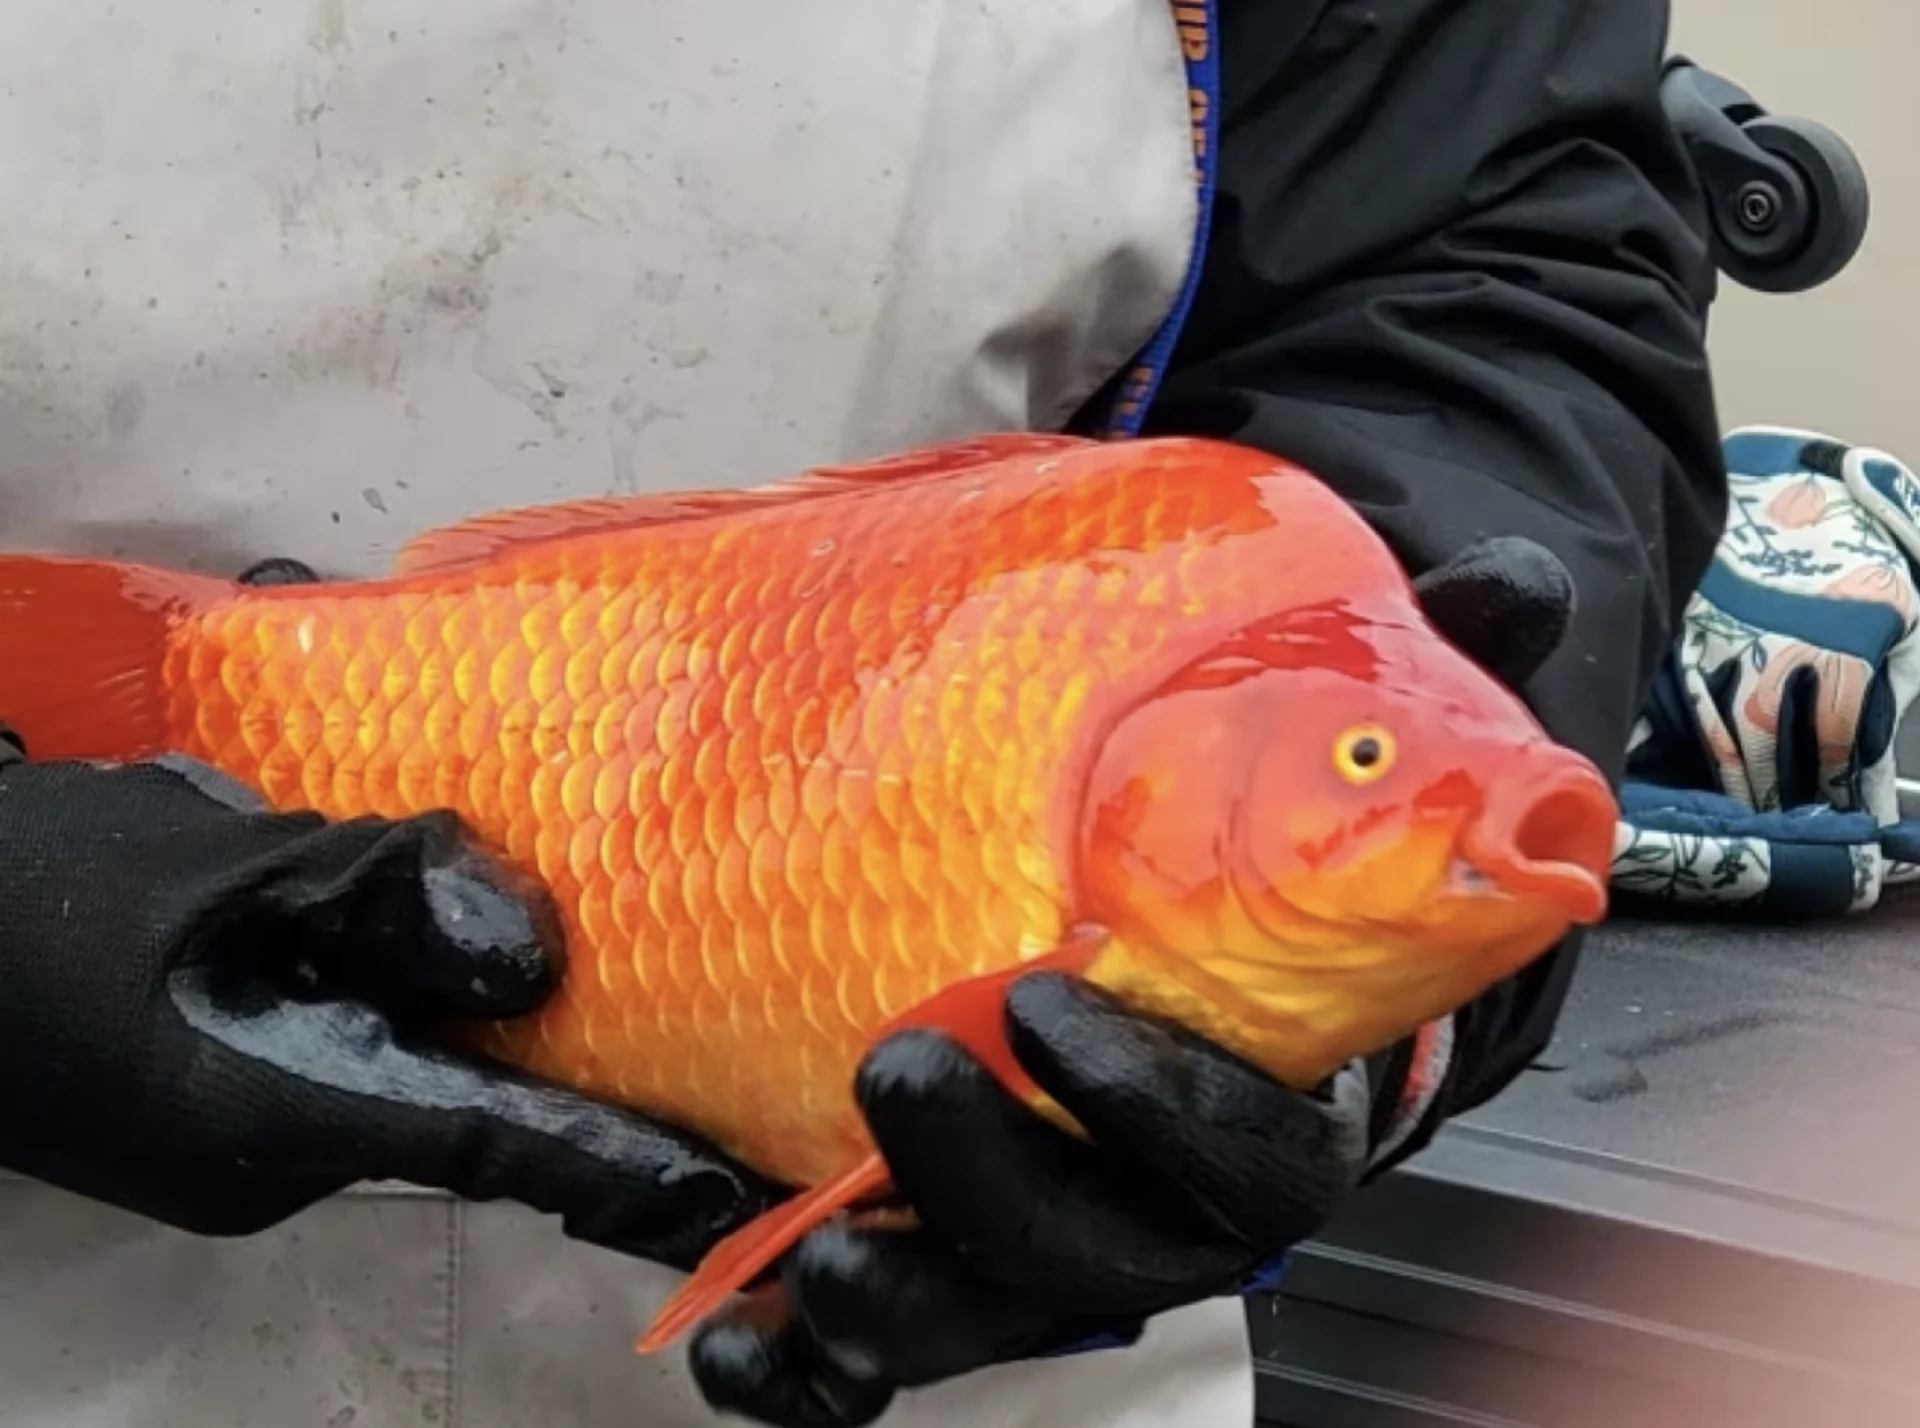 The London feral goldfish population persists, killing native species